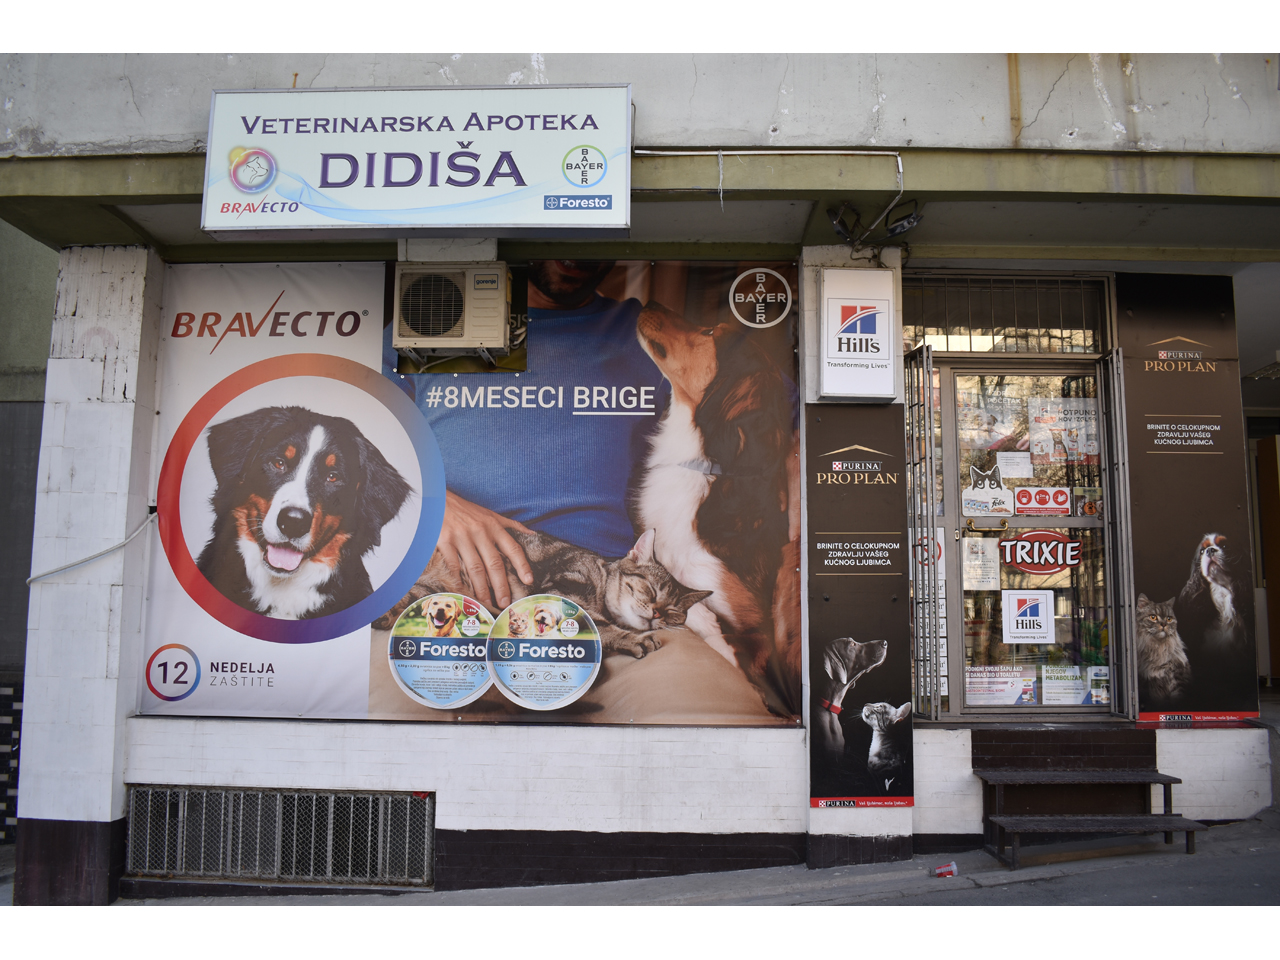 DIDISA VETERINARY PHARMACY AND PET SHOP Veterinarian pharmacies Beograd